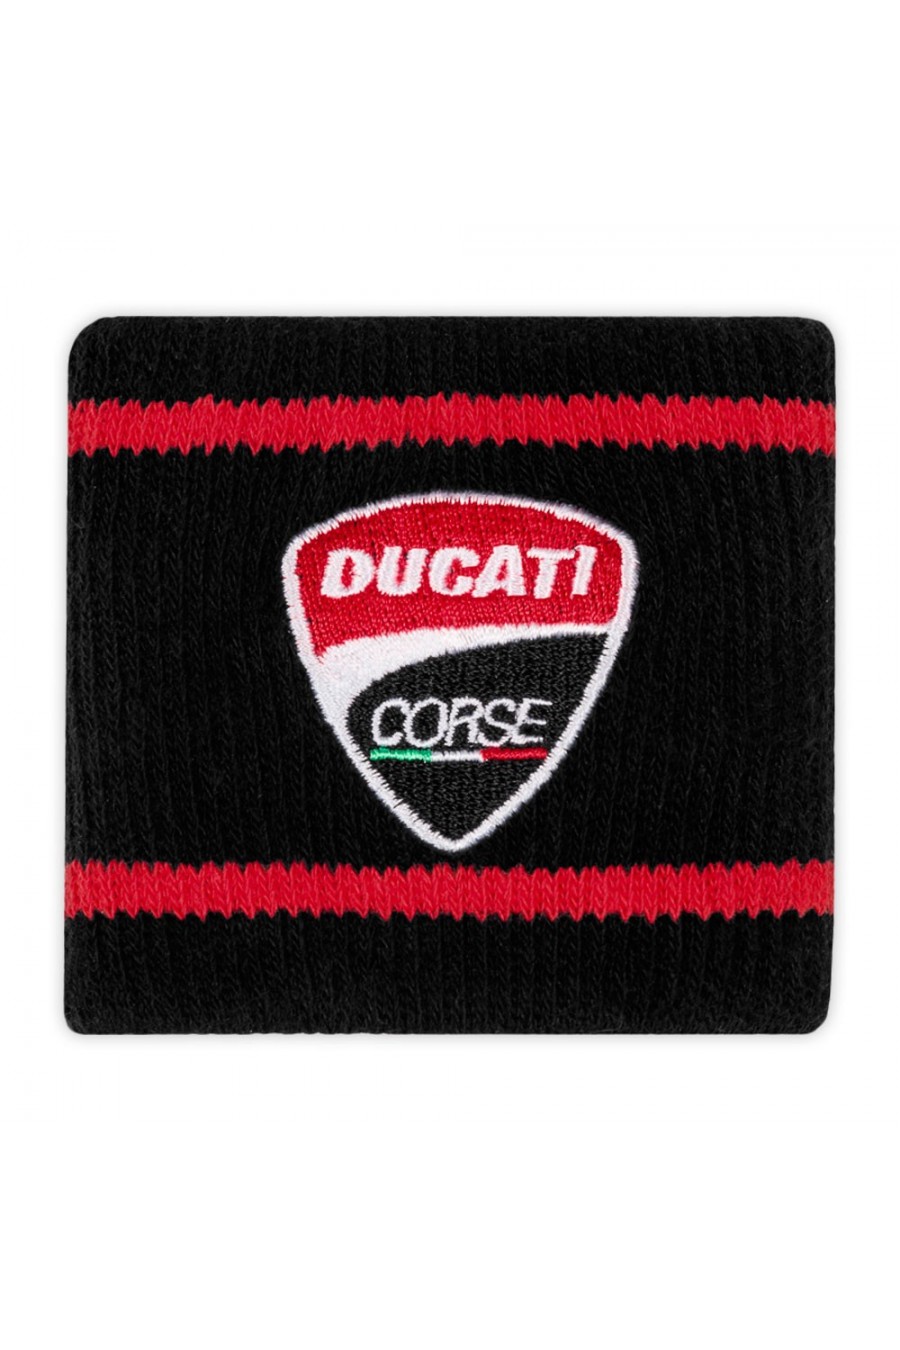 Ducati Corse armband